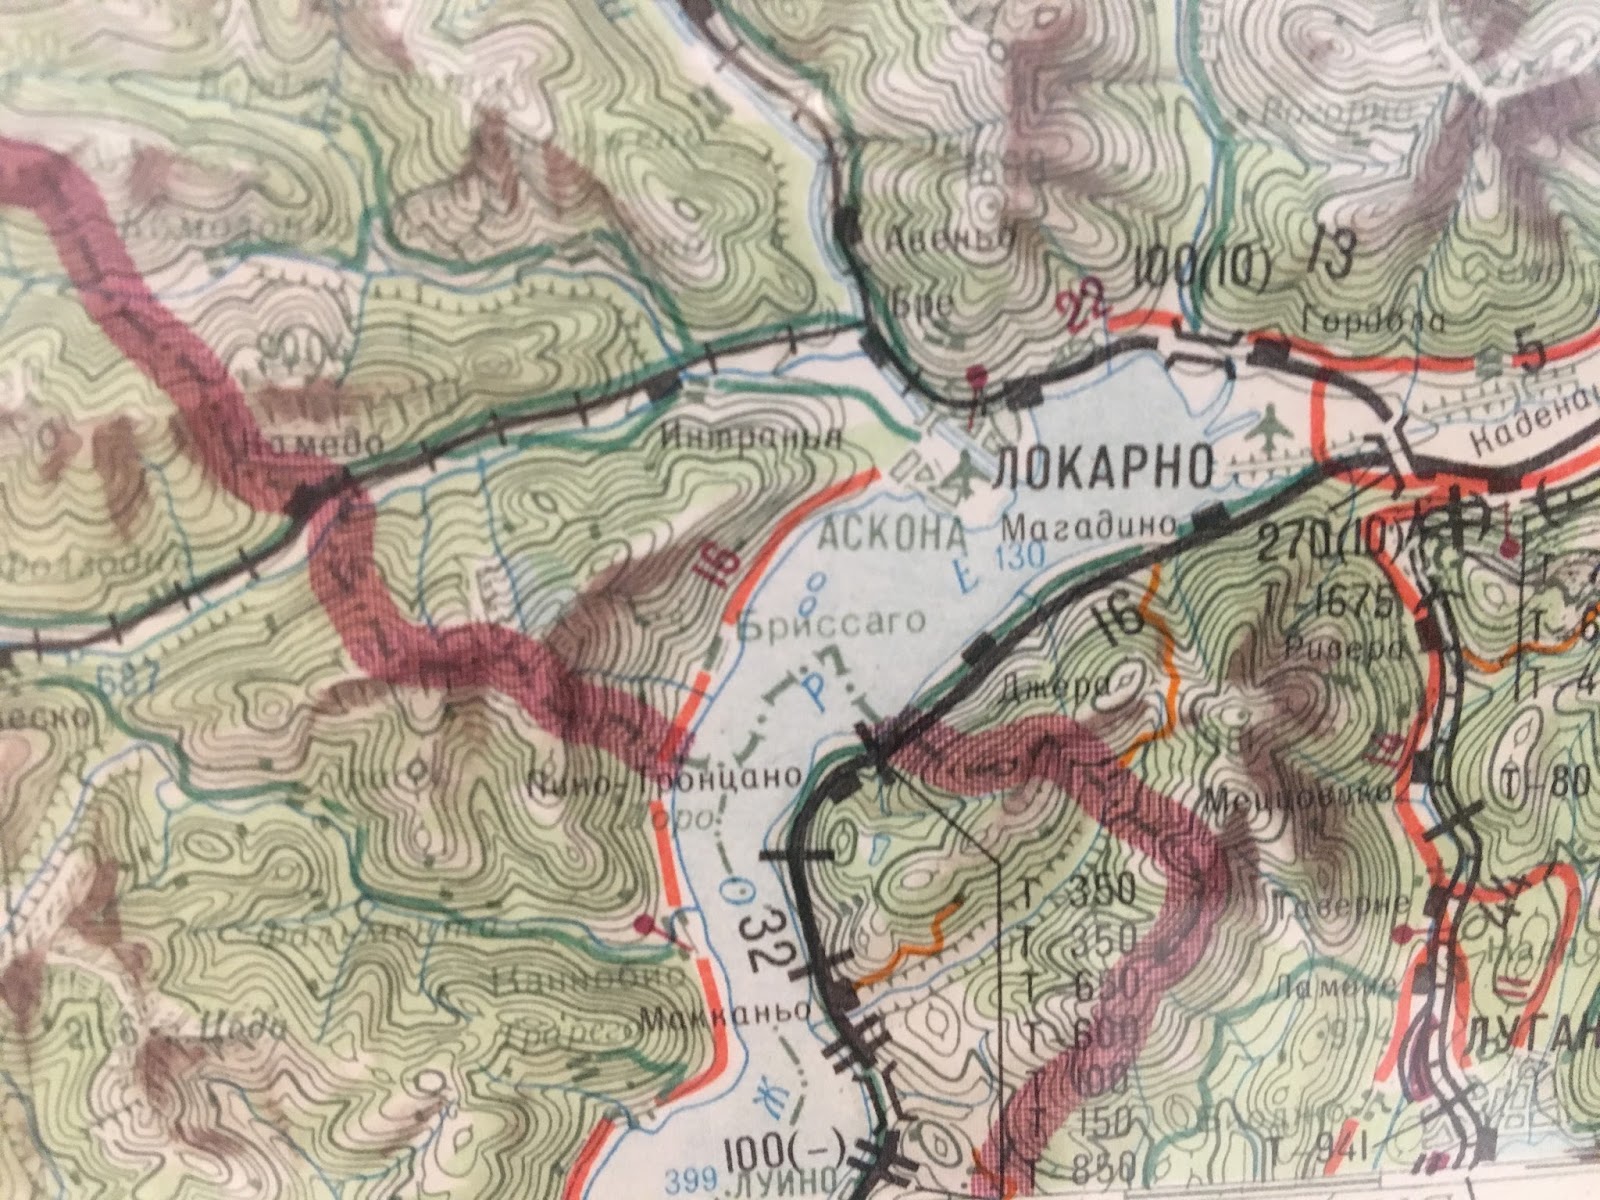 Soviet Maps of Switzerland: the case of Ticino